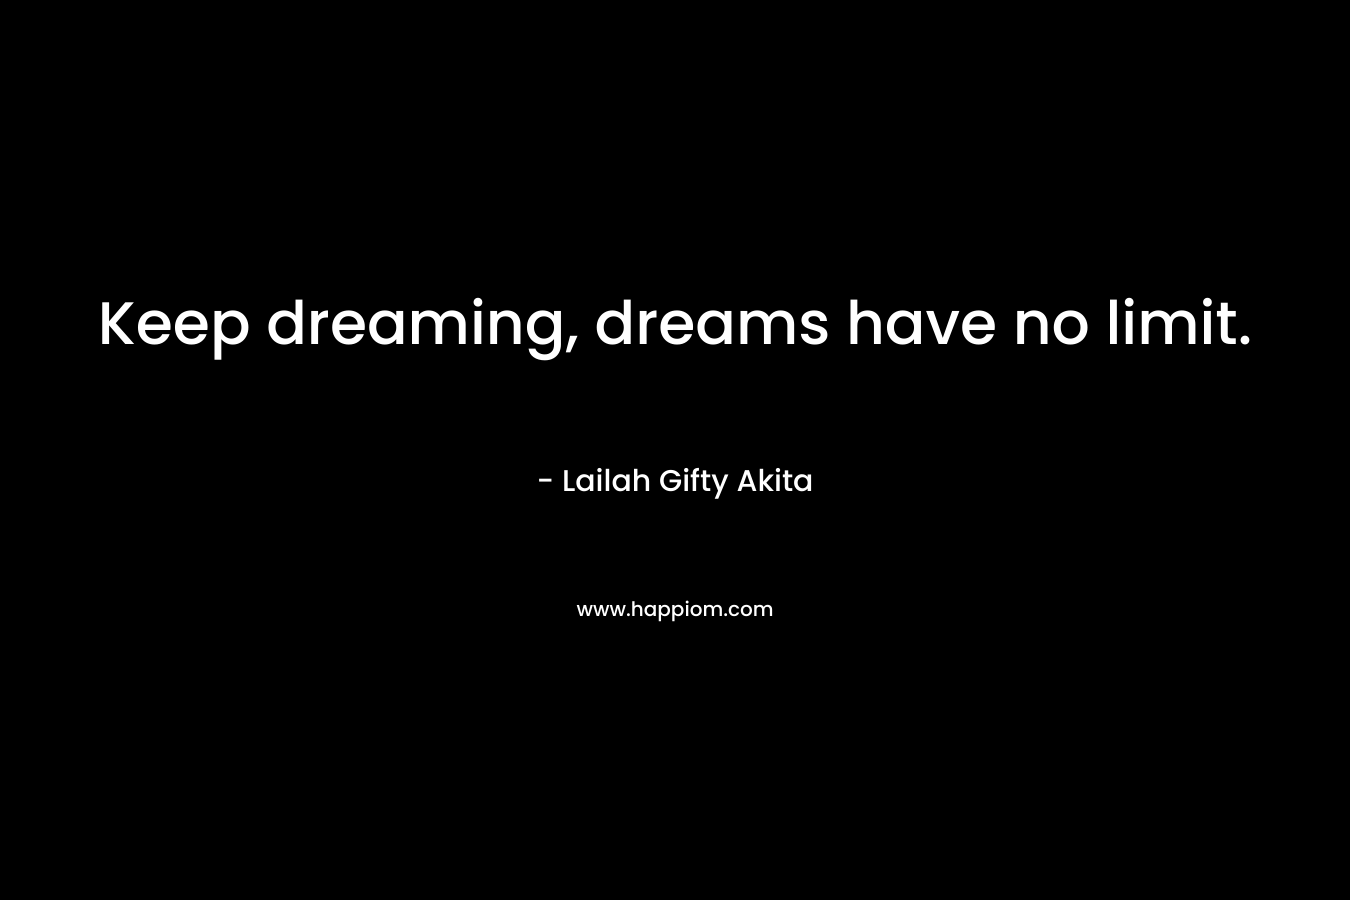 Keep dreaming, dreams have no limit.